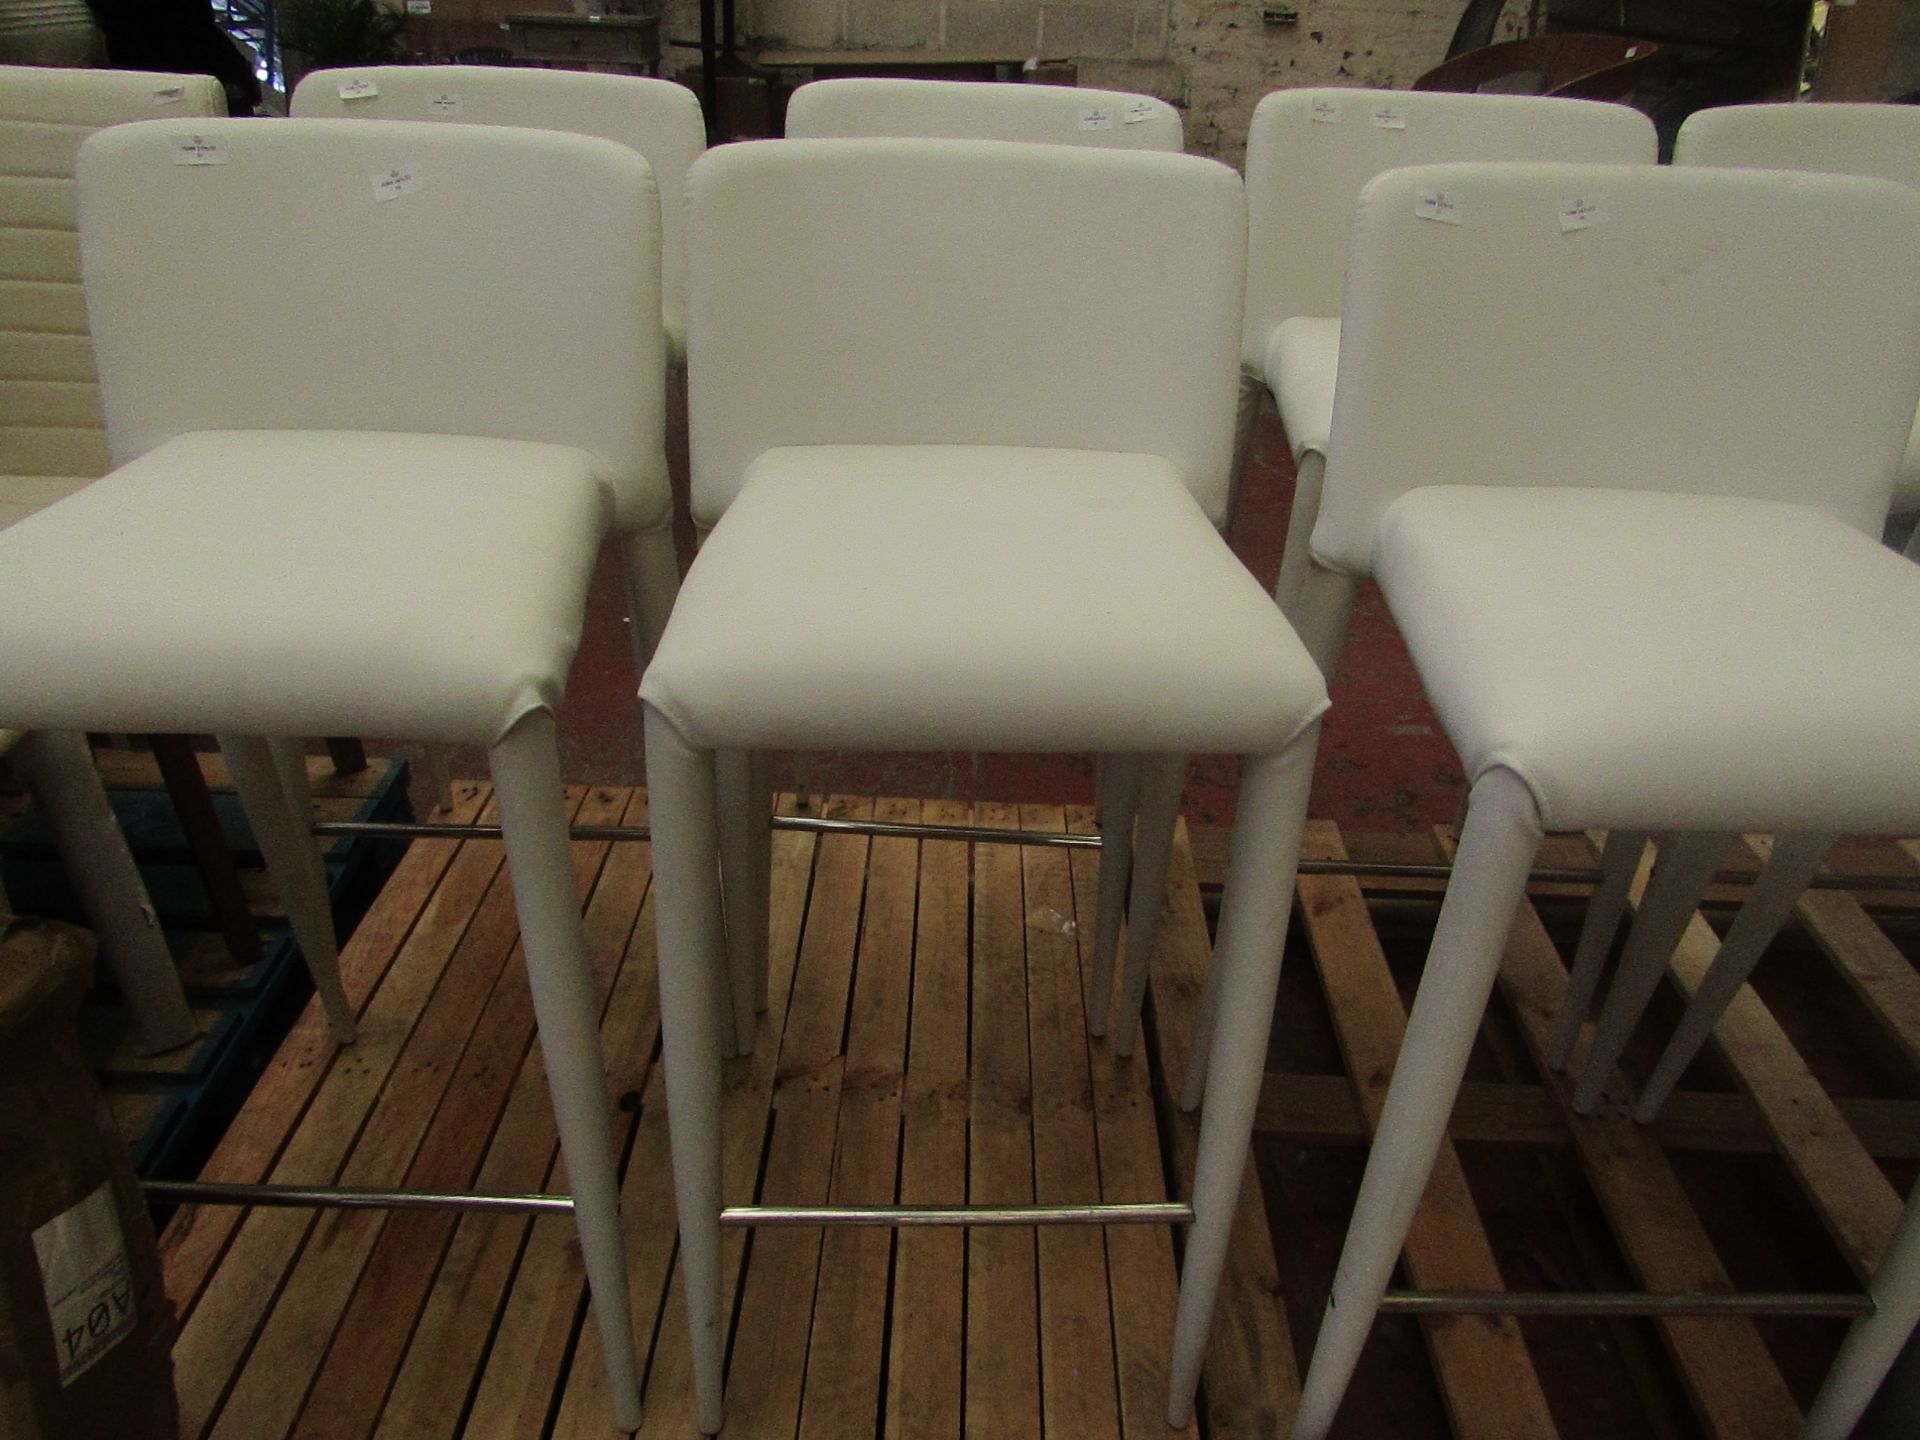 1 x Dwell Attra Gloss Extending 6-10 Seater White Dining Table RRP £879.00 SKU DWE-APM-105709-BER